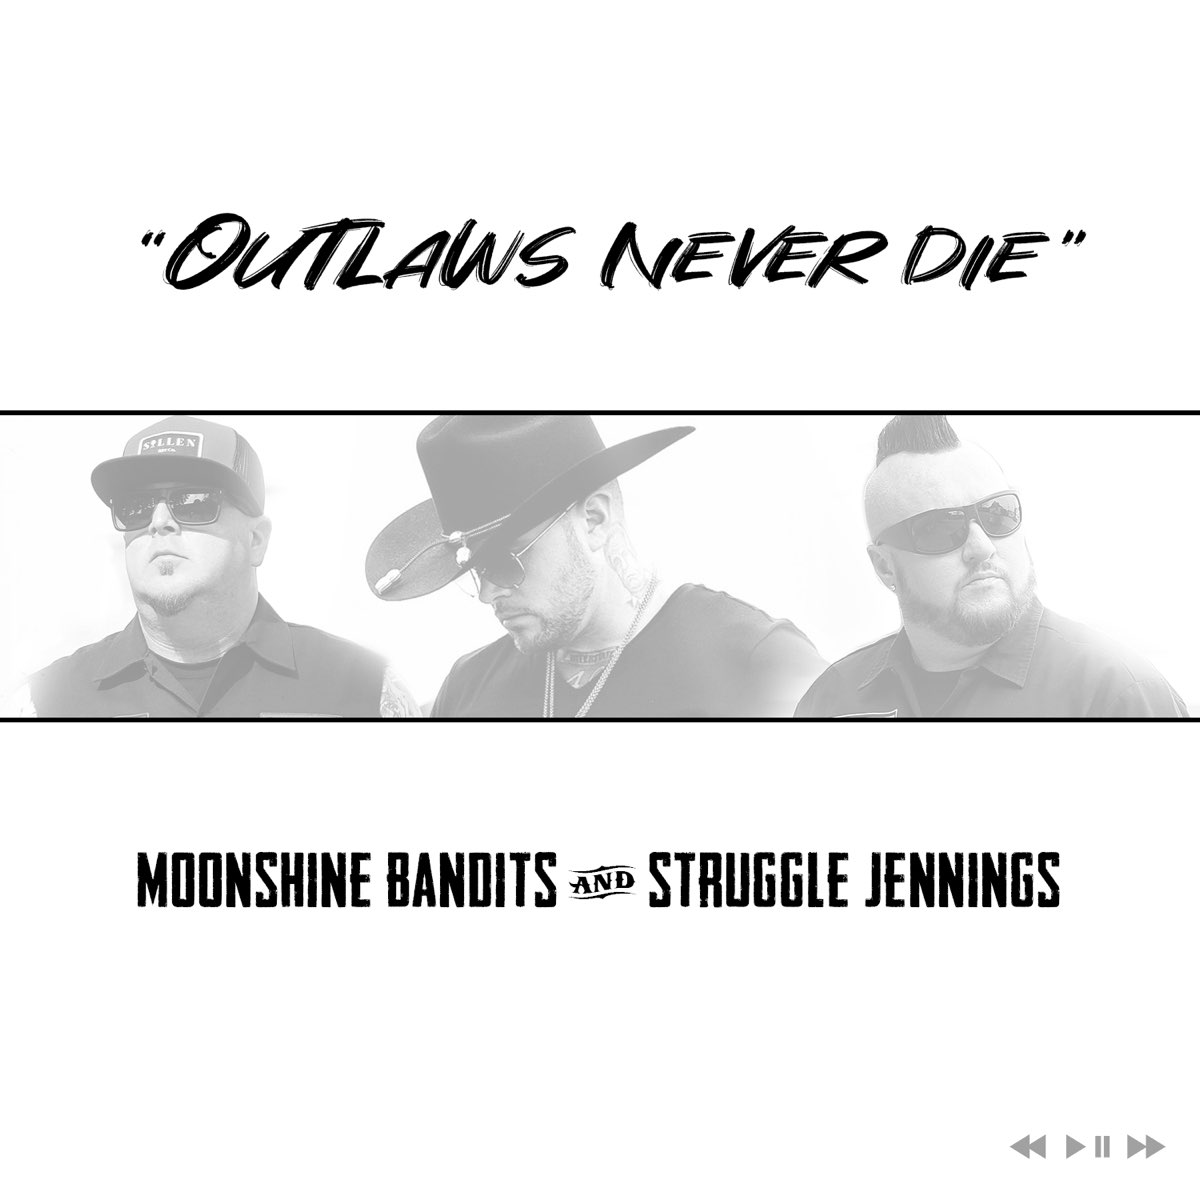 Outlaw бандит. Never die исполнитель. "Moonshine Bandits" && ( исполнитель | группа | музыка | Music | Band | artist ) && (фото | photo). Moonshine Bandits. Гимн бандитов